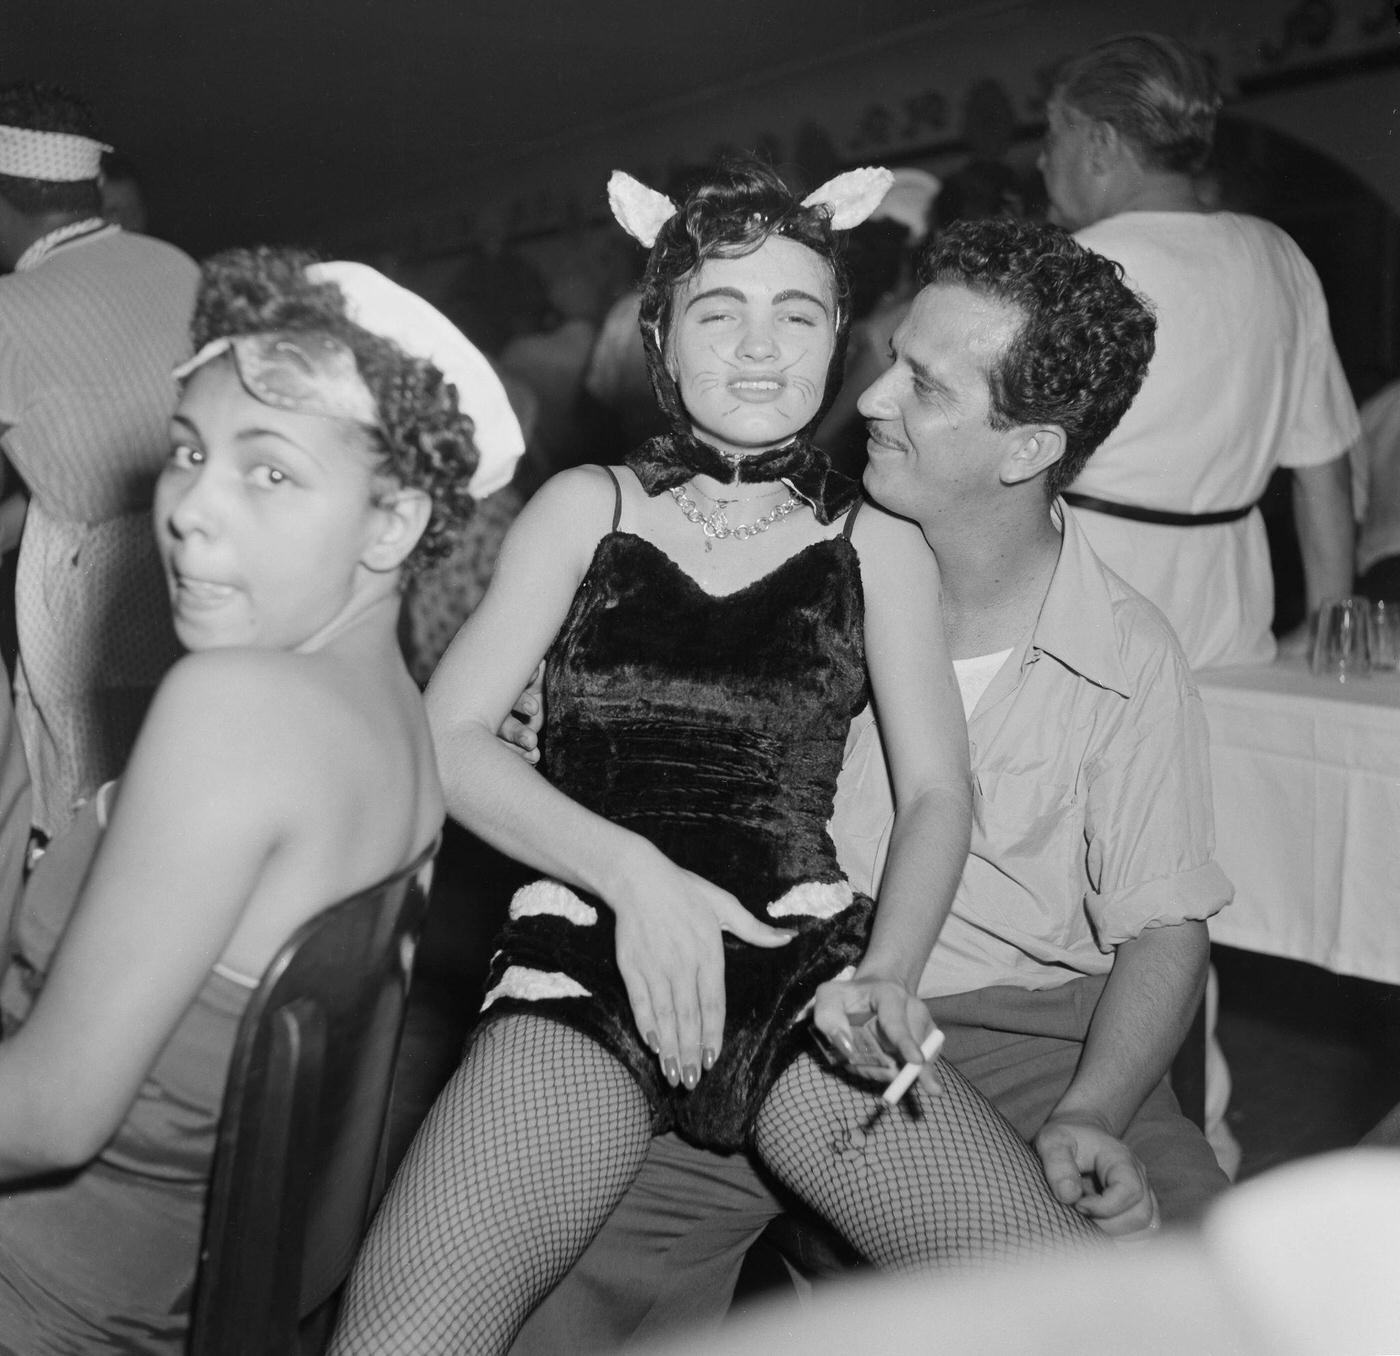 Festive Partygoers, Rio Carnival Parade 1953